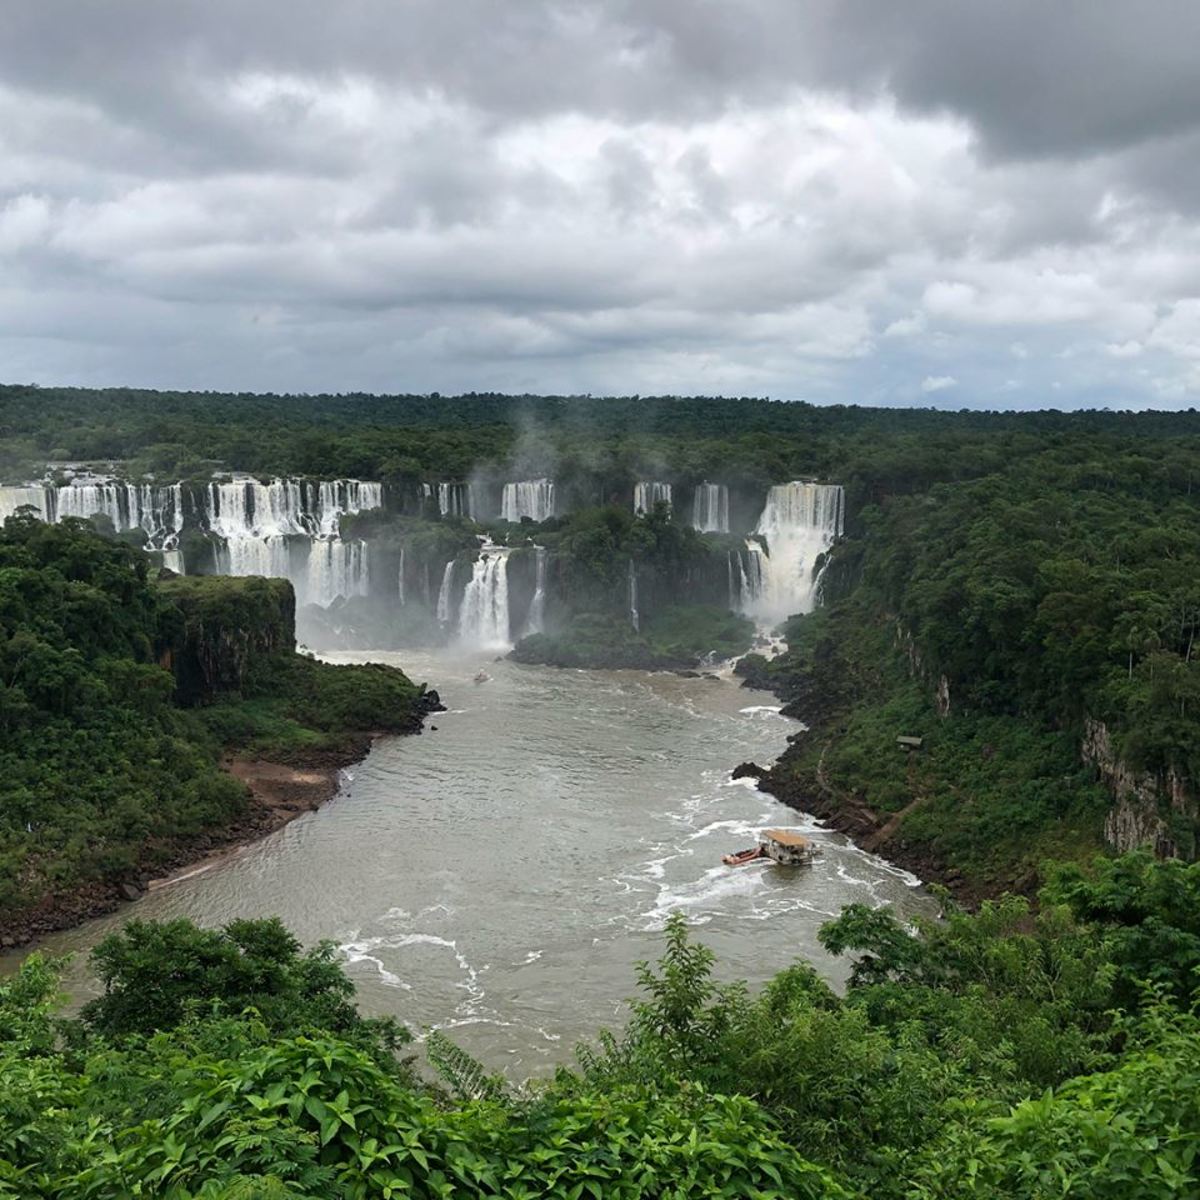 Scenic Beauty of Iguazu Falls!